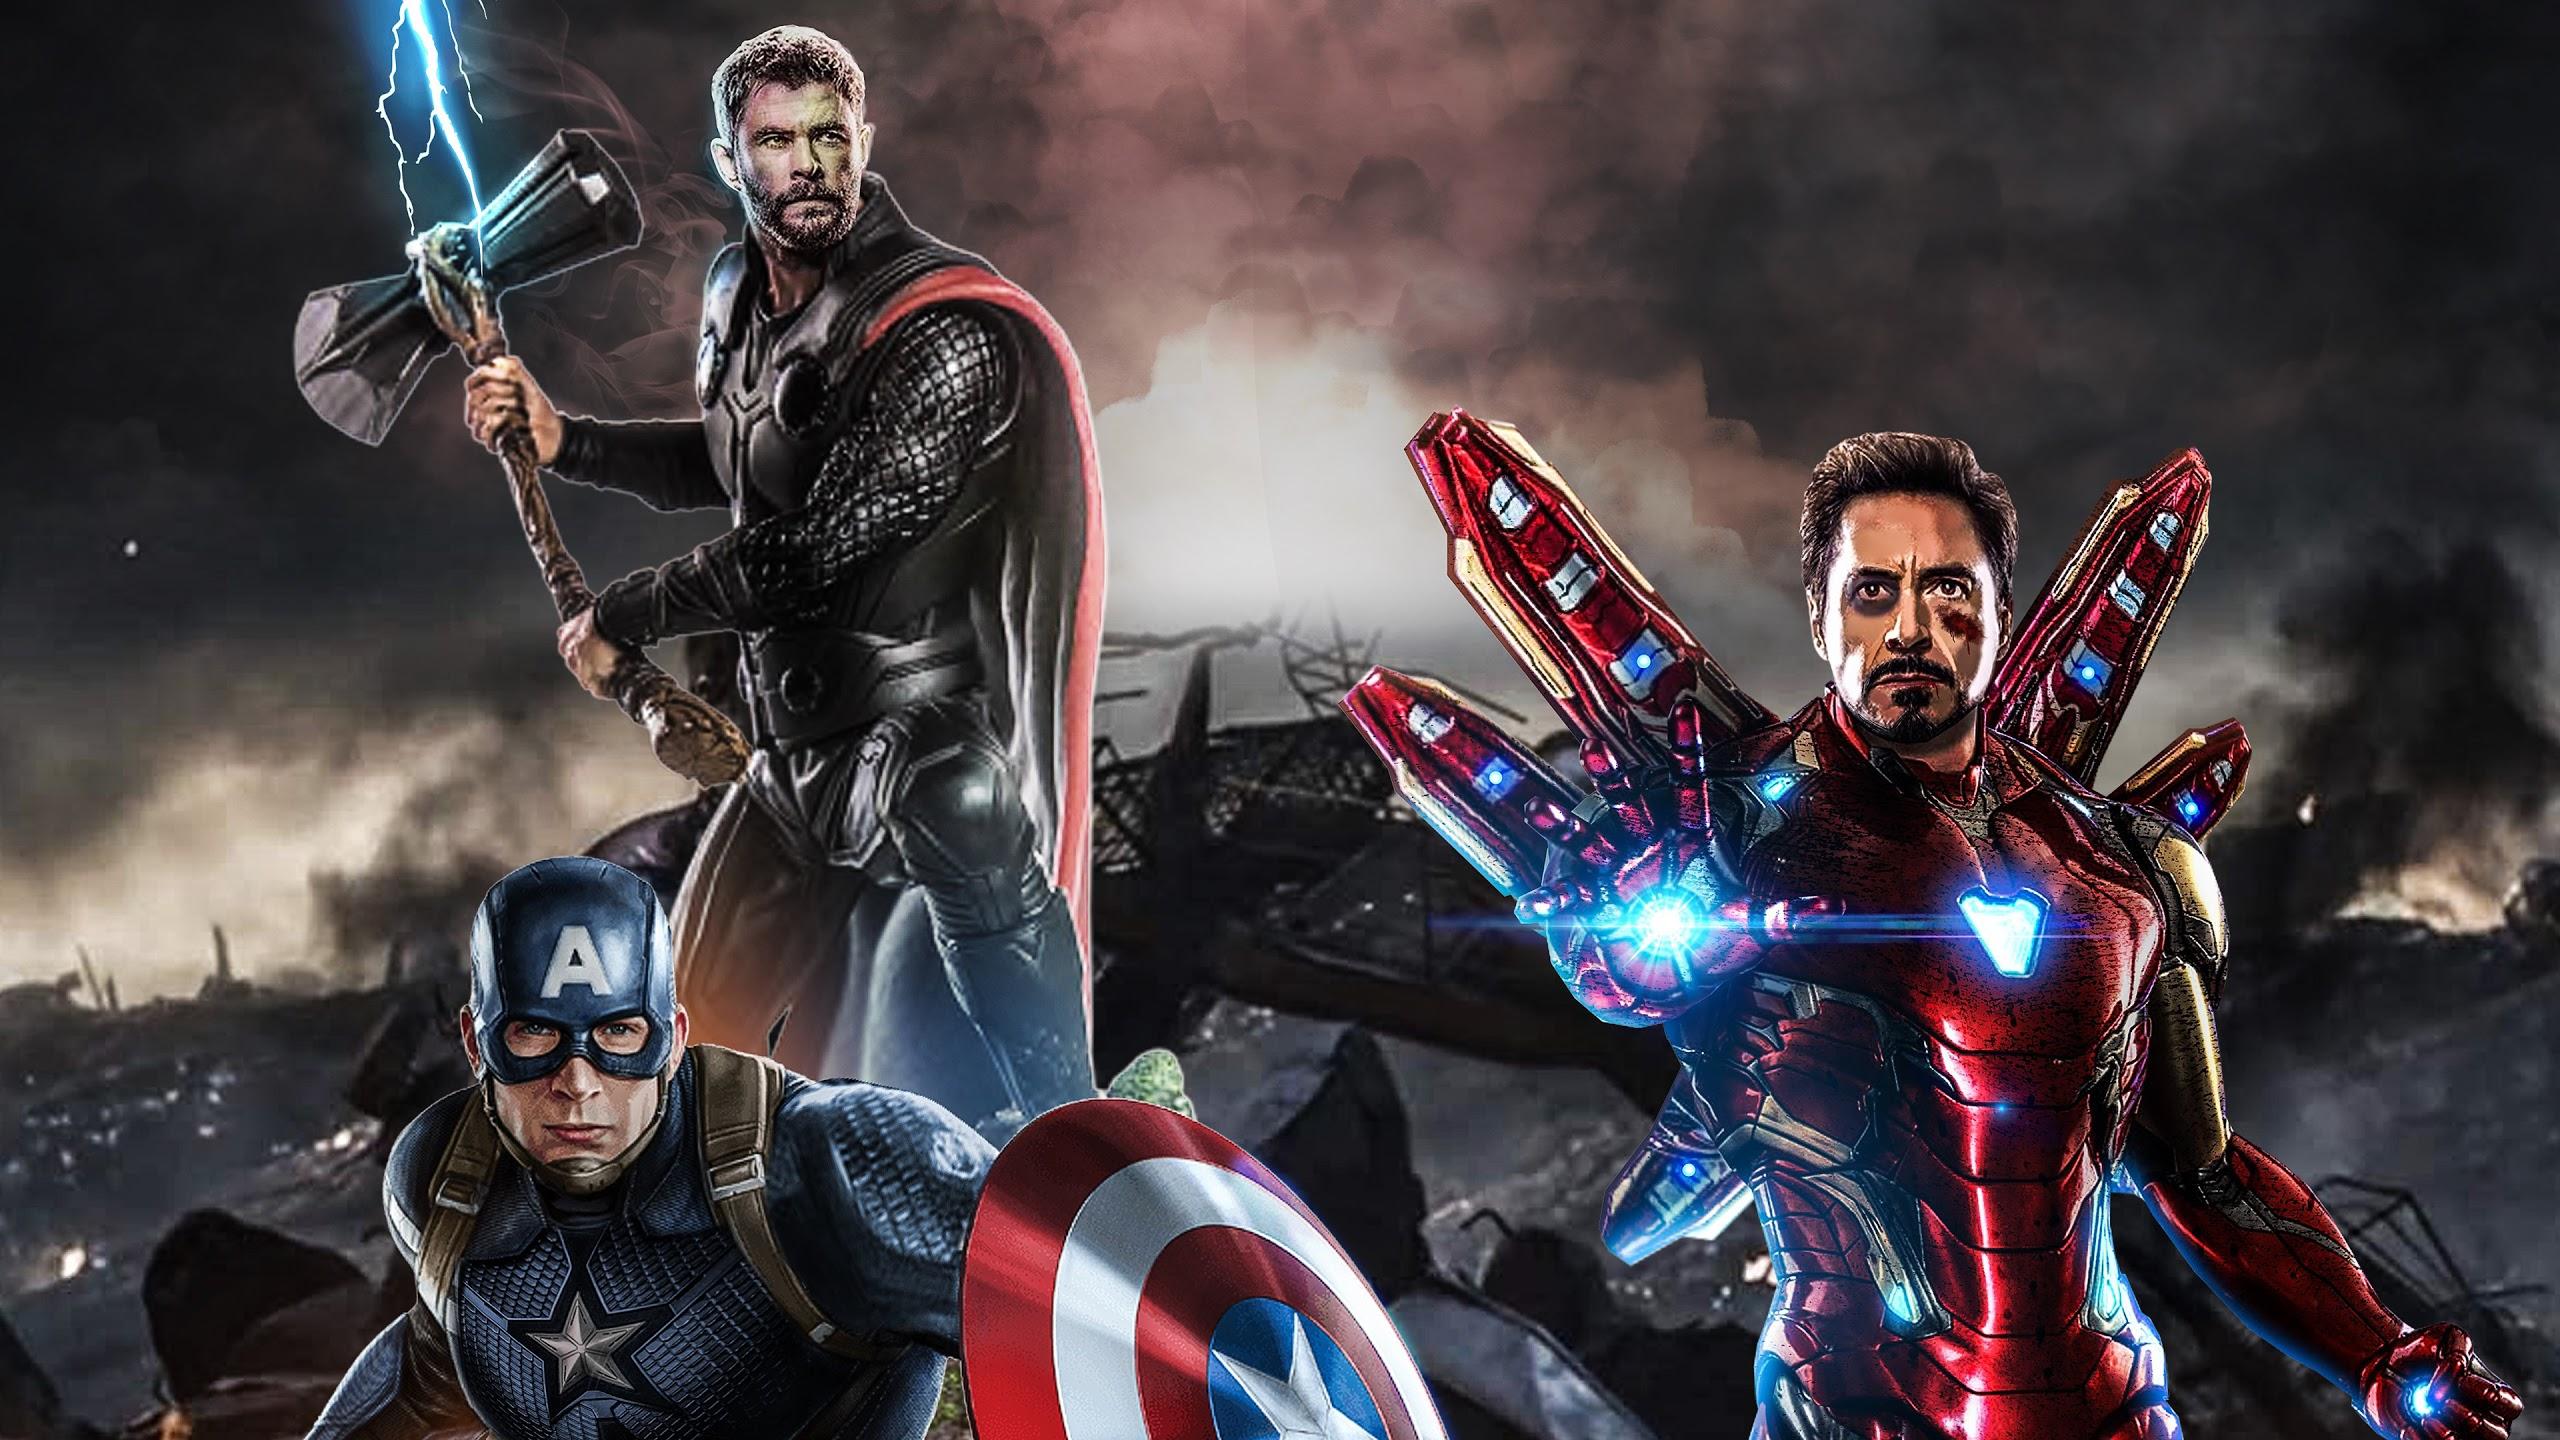 4K wallpaper: Iron Man Vs Captain America Wallpaper HD